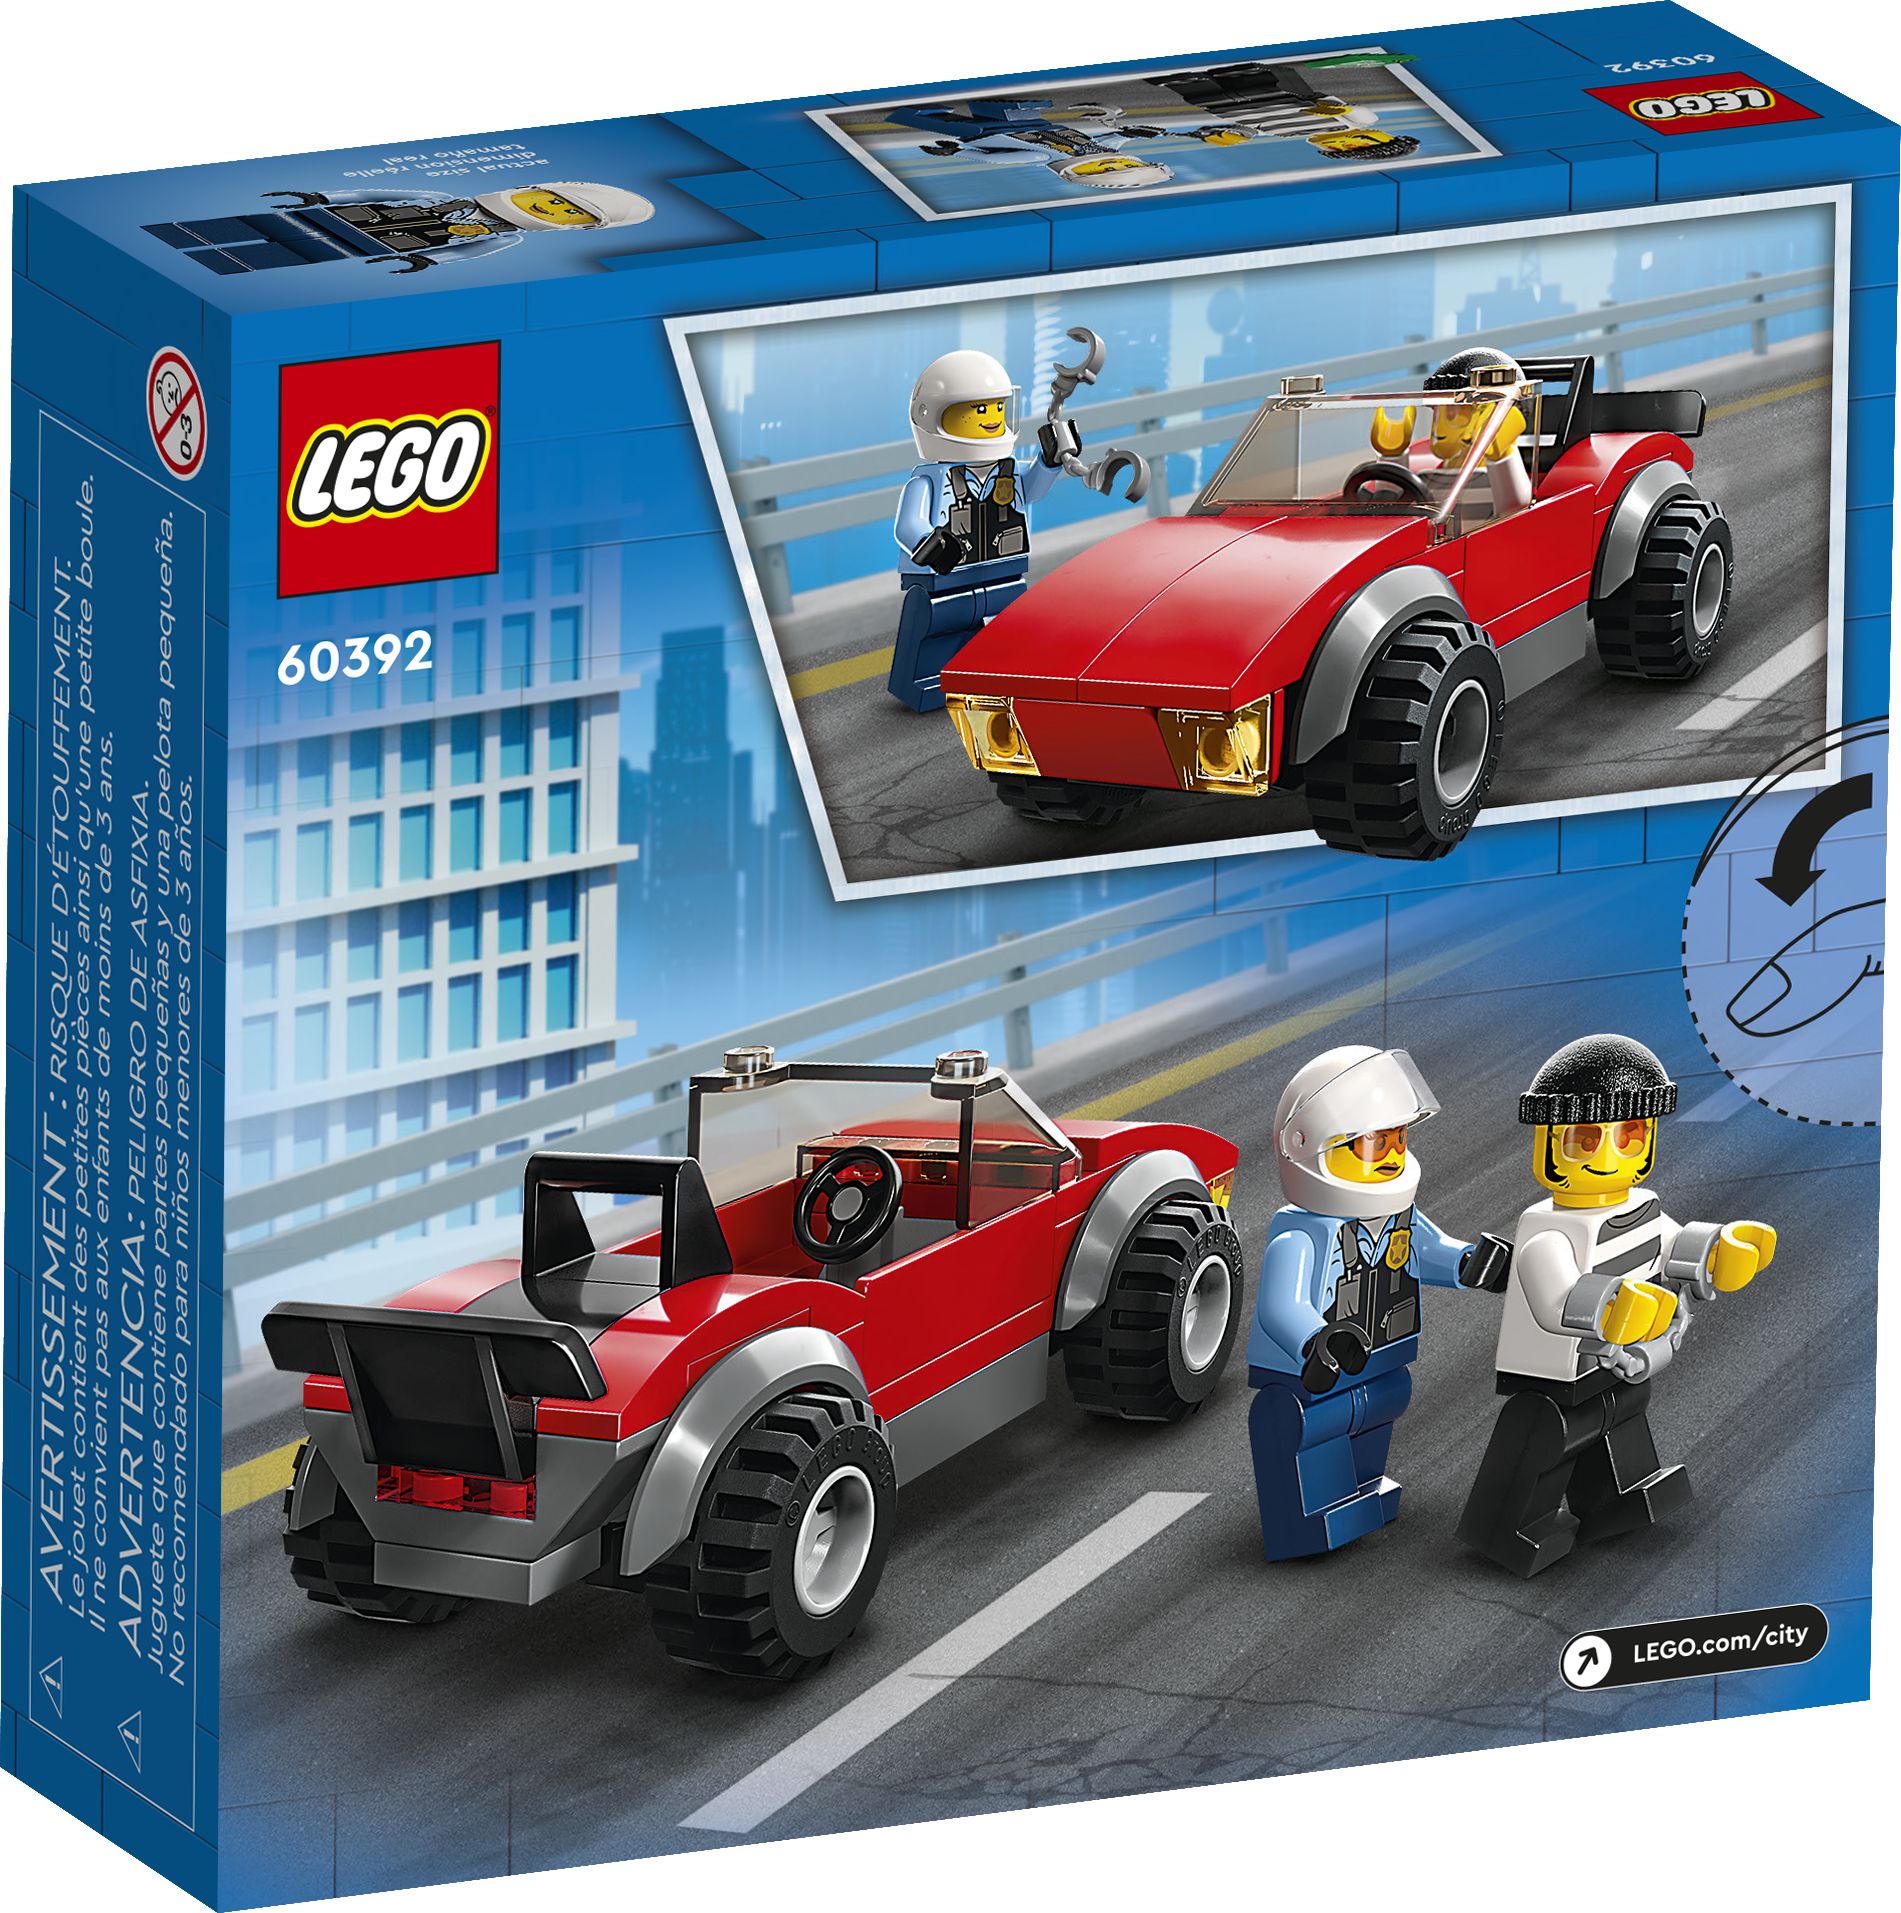 LEGO City 60392 Verfolgungsjagd mit dem Polizeimotorrad LEGO_60392_Box5_v39.jpg